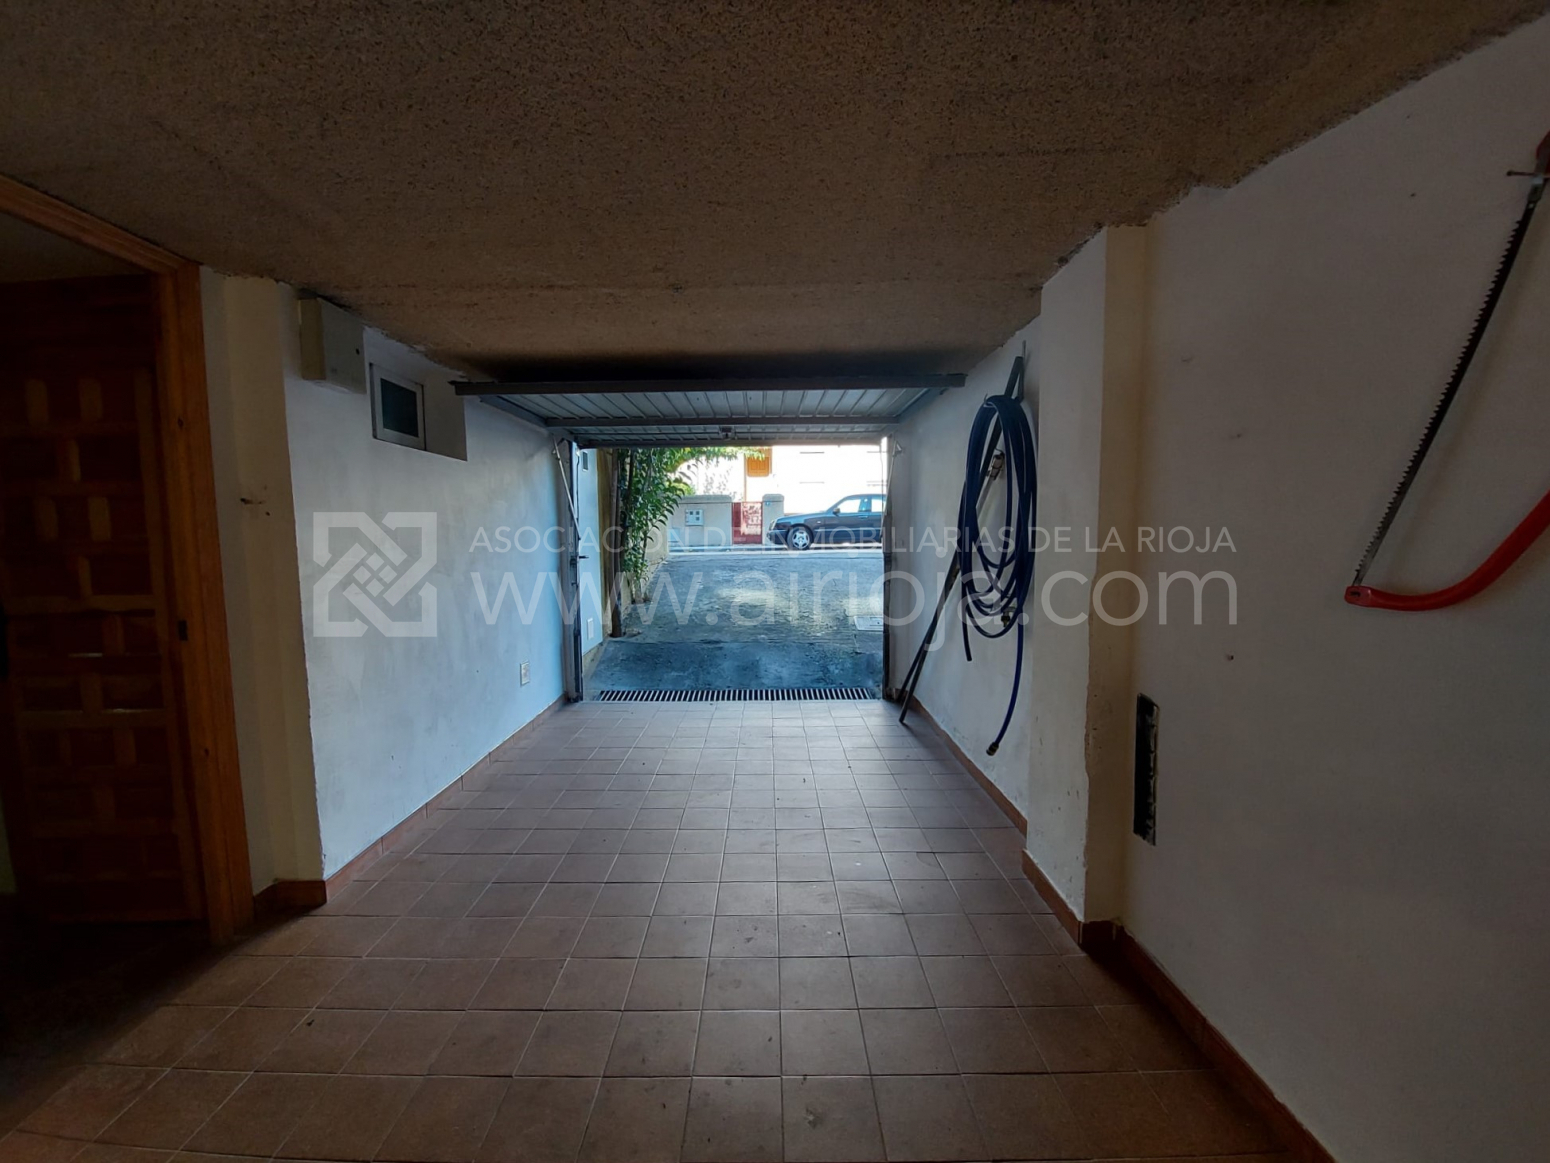 Casas o chalets-Venta-Lardero-634435-Foto-17